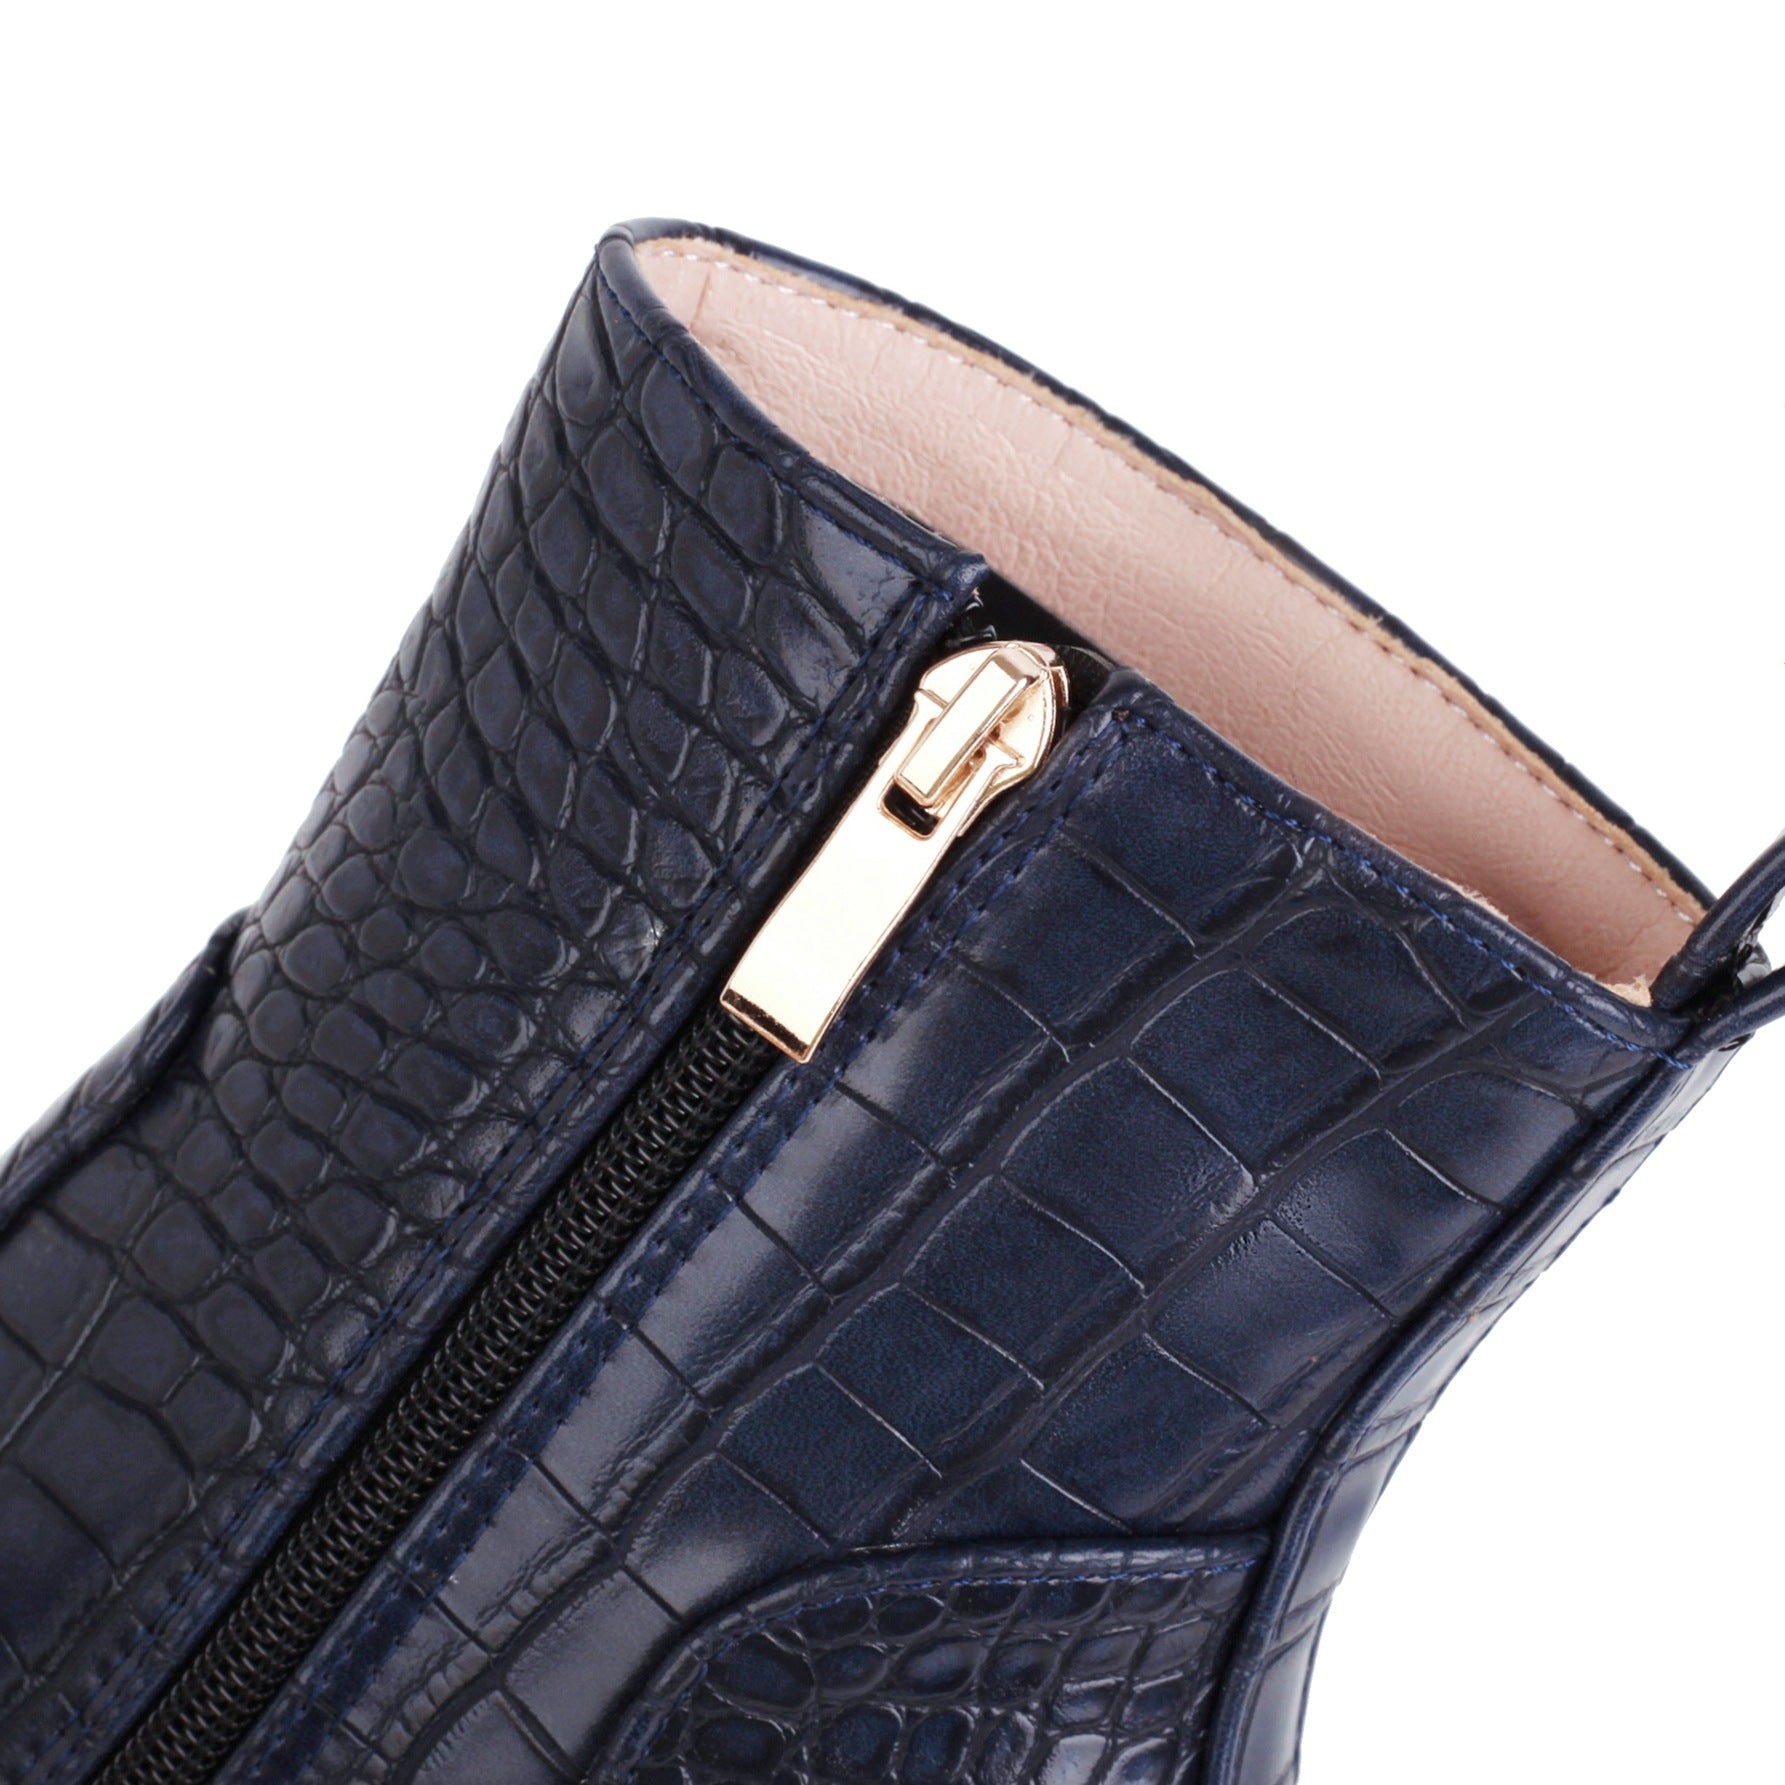 Bigsizeheels Fashion chunky heel platform side zipper boots - Blue-plus size/size 15